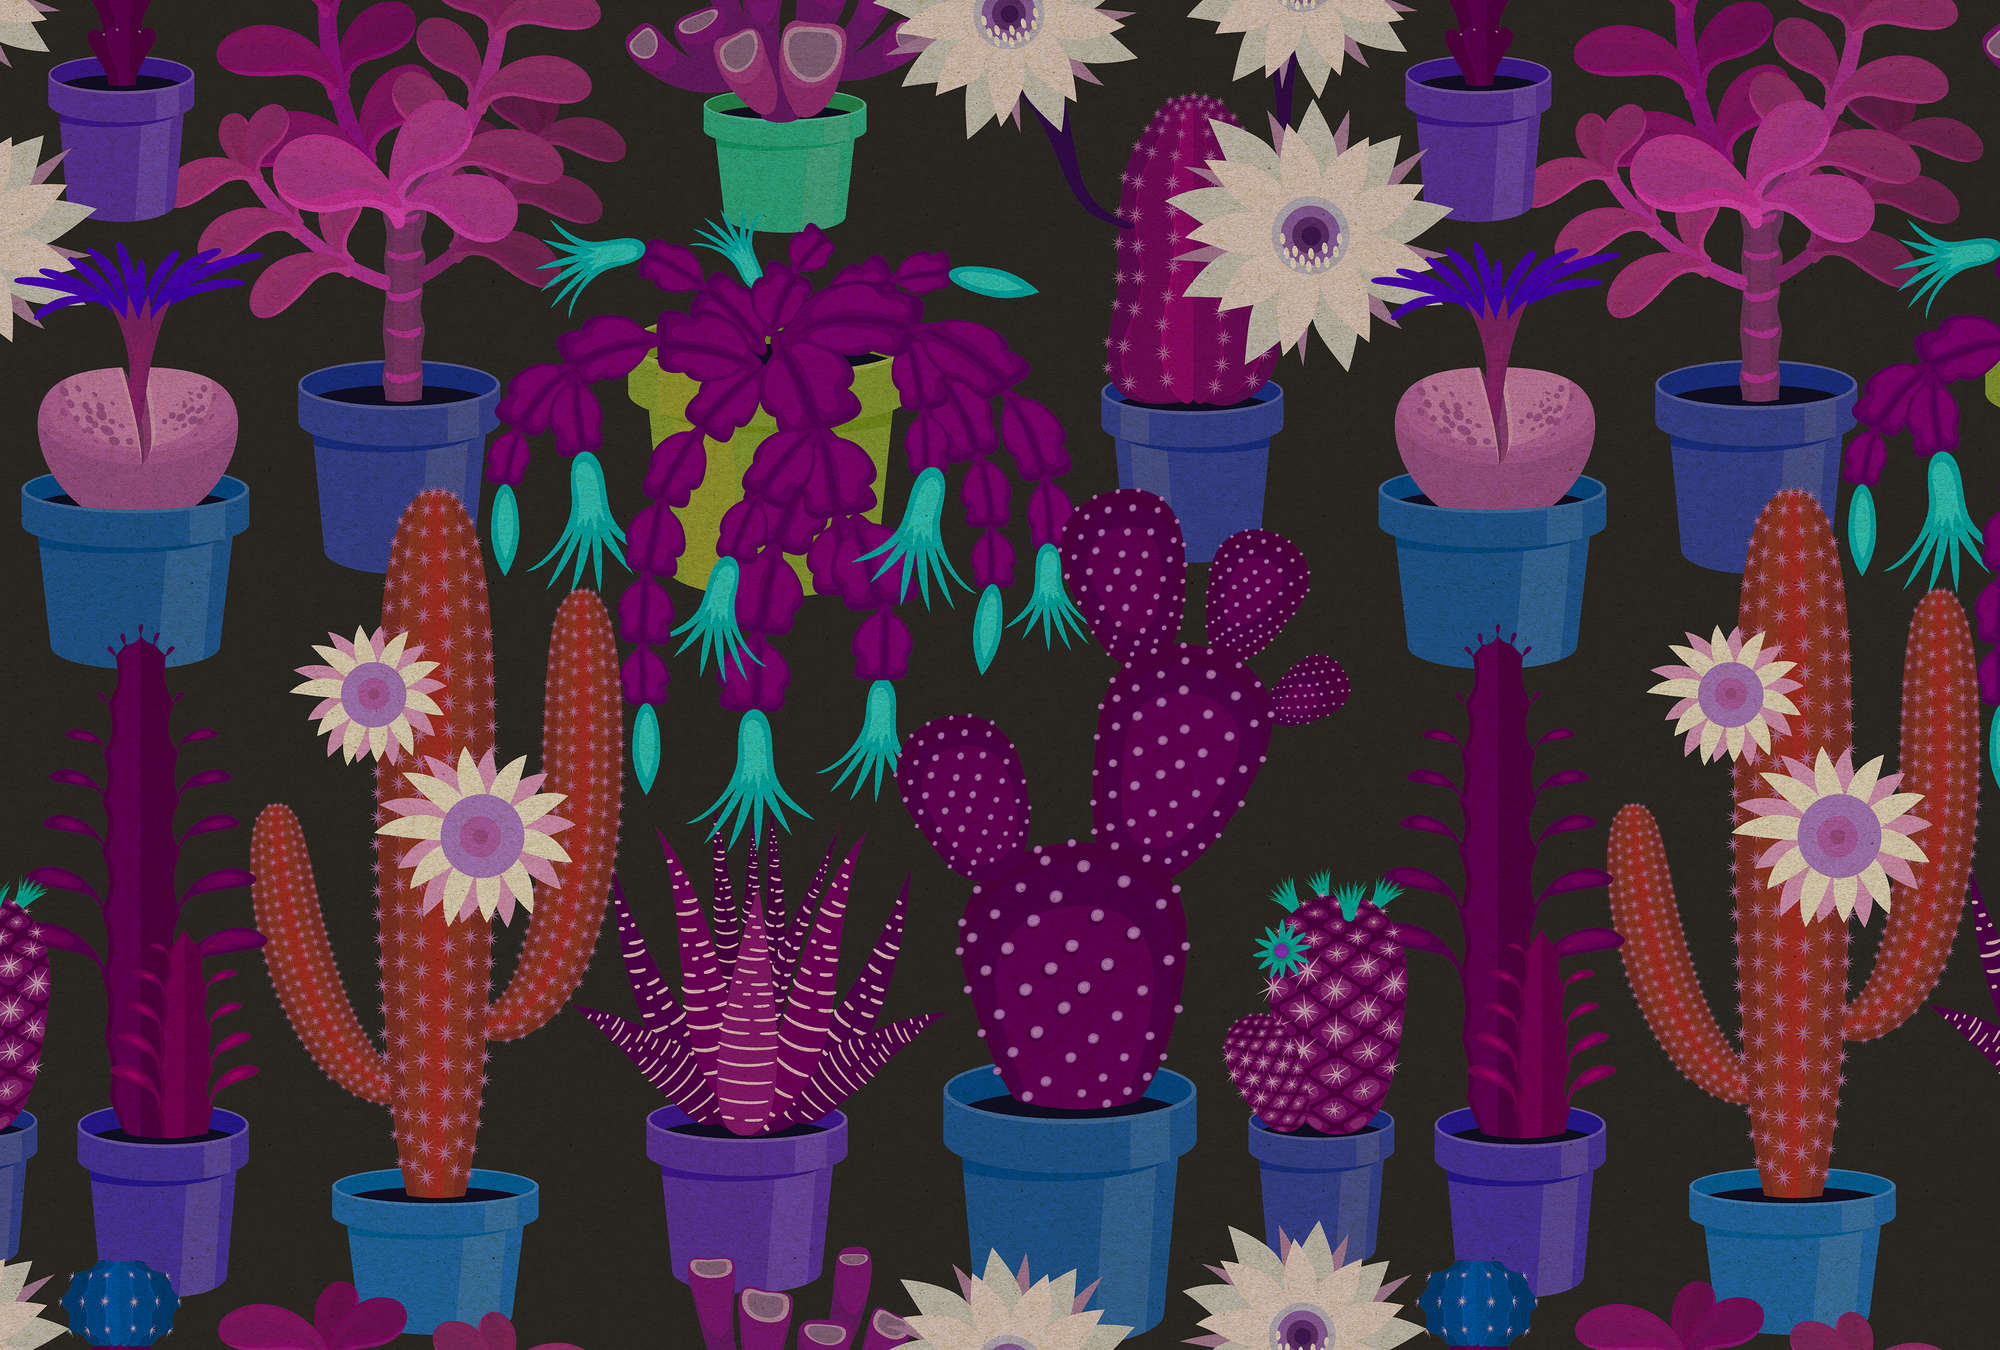             Jardín de cactus 1 - Papel pintado fotográfico en estructura de cartón con cactus de colores en estilo cómic - Azul, Naranja | Vellón liso mate
        